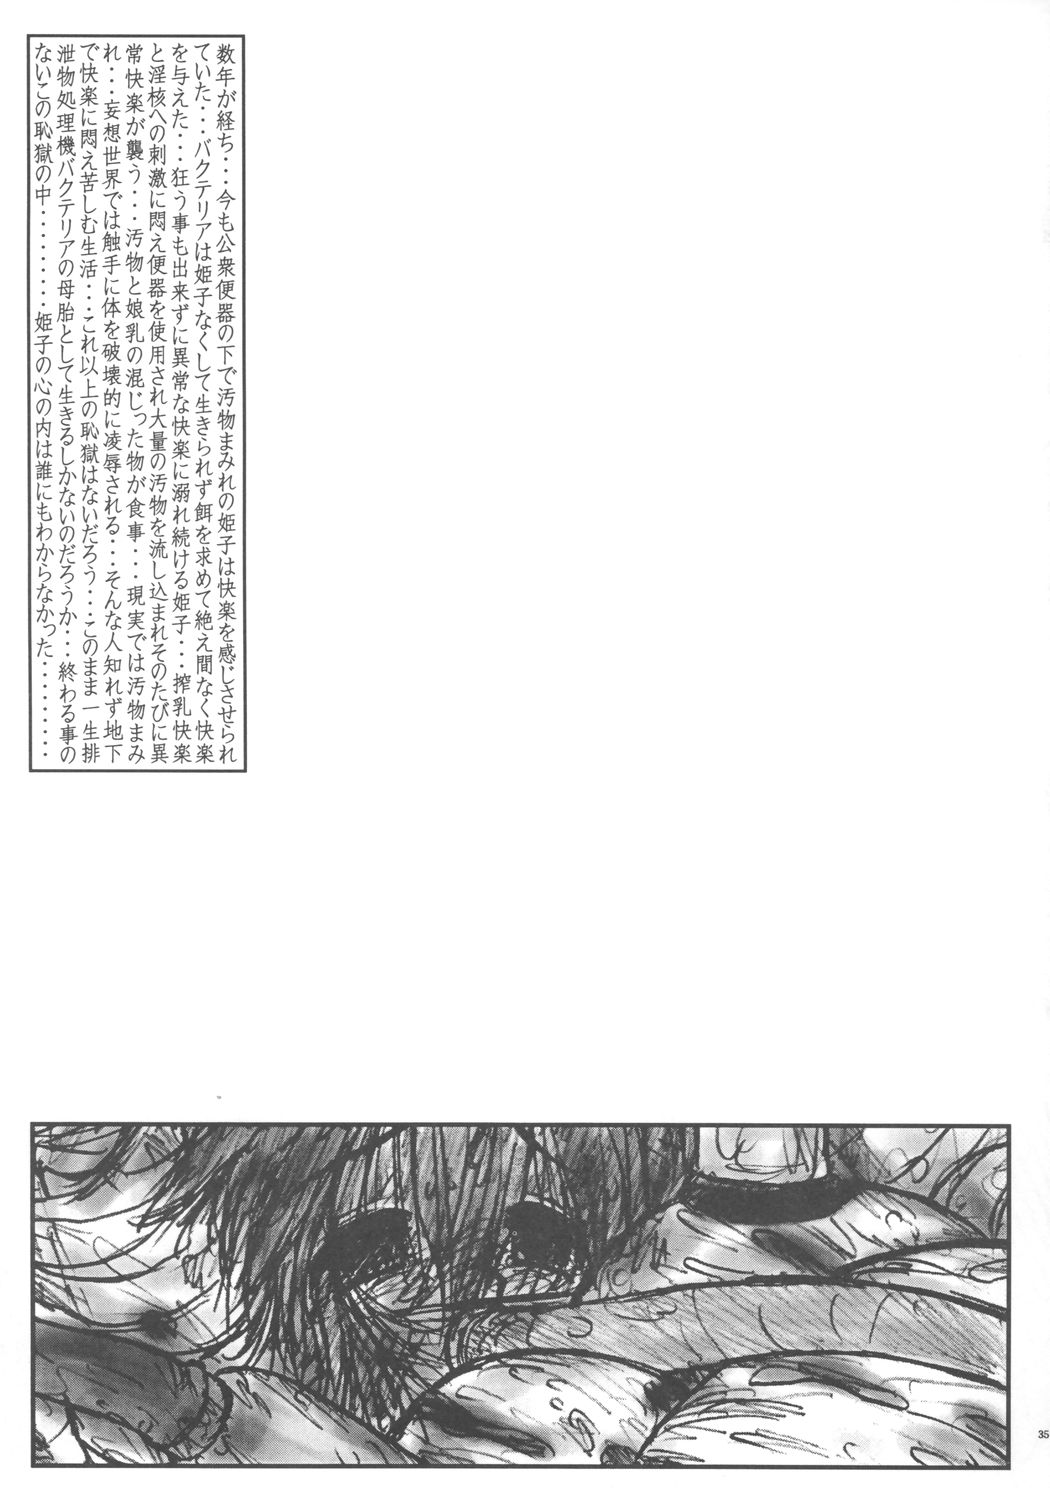 [Circle ENERGY (Imaki Hitotose)] Hime Puchi (Hyper Anna) [2004-01-20] [サークルENERGY (新春夏秋冬)] 姫ぷち (ハイパーあんな) [2004年1月20日]